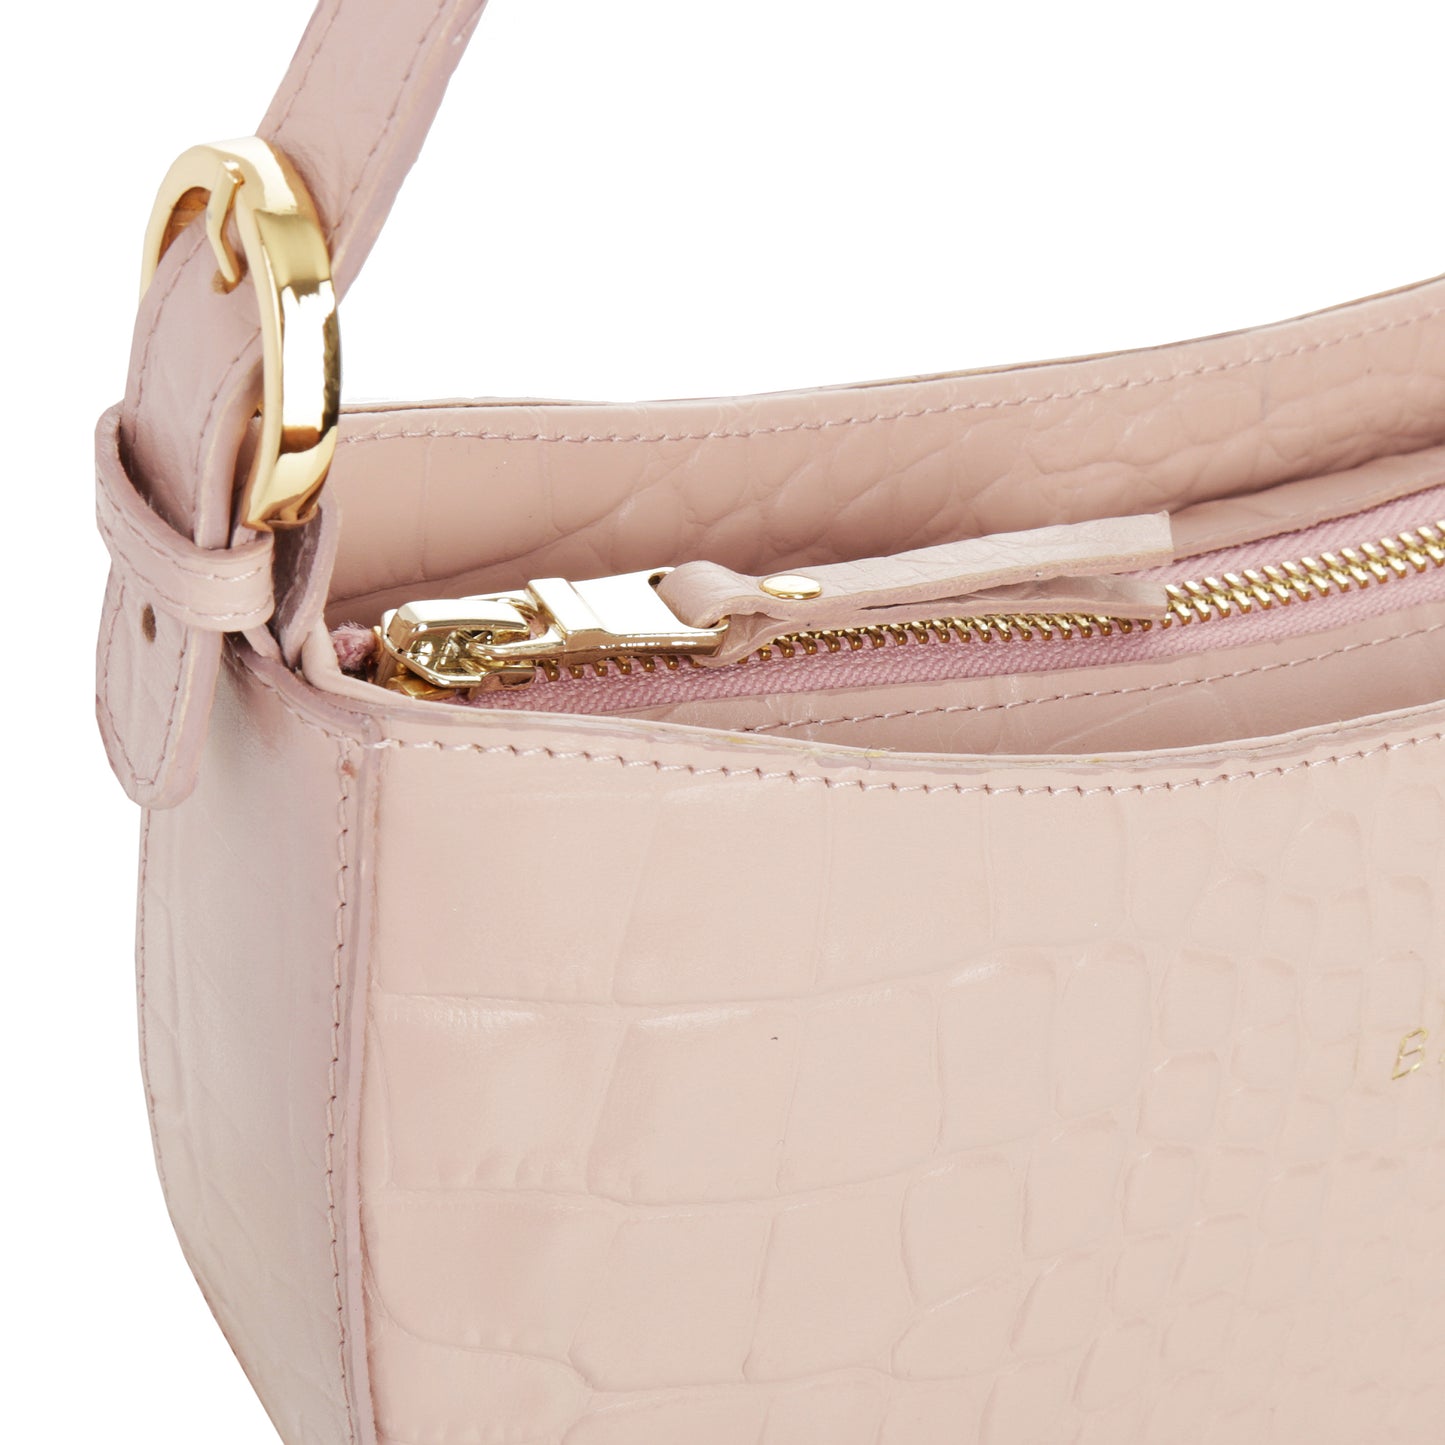 MOON croco powder pink women's leather handbag